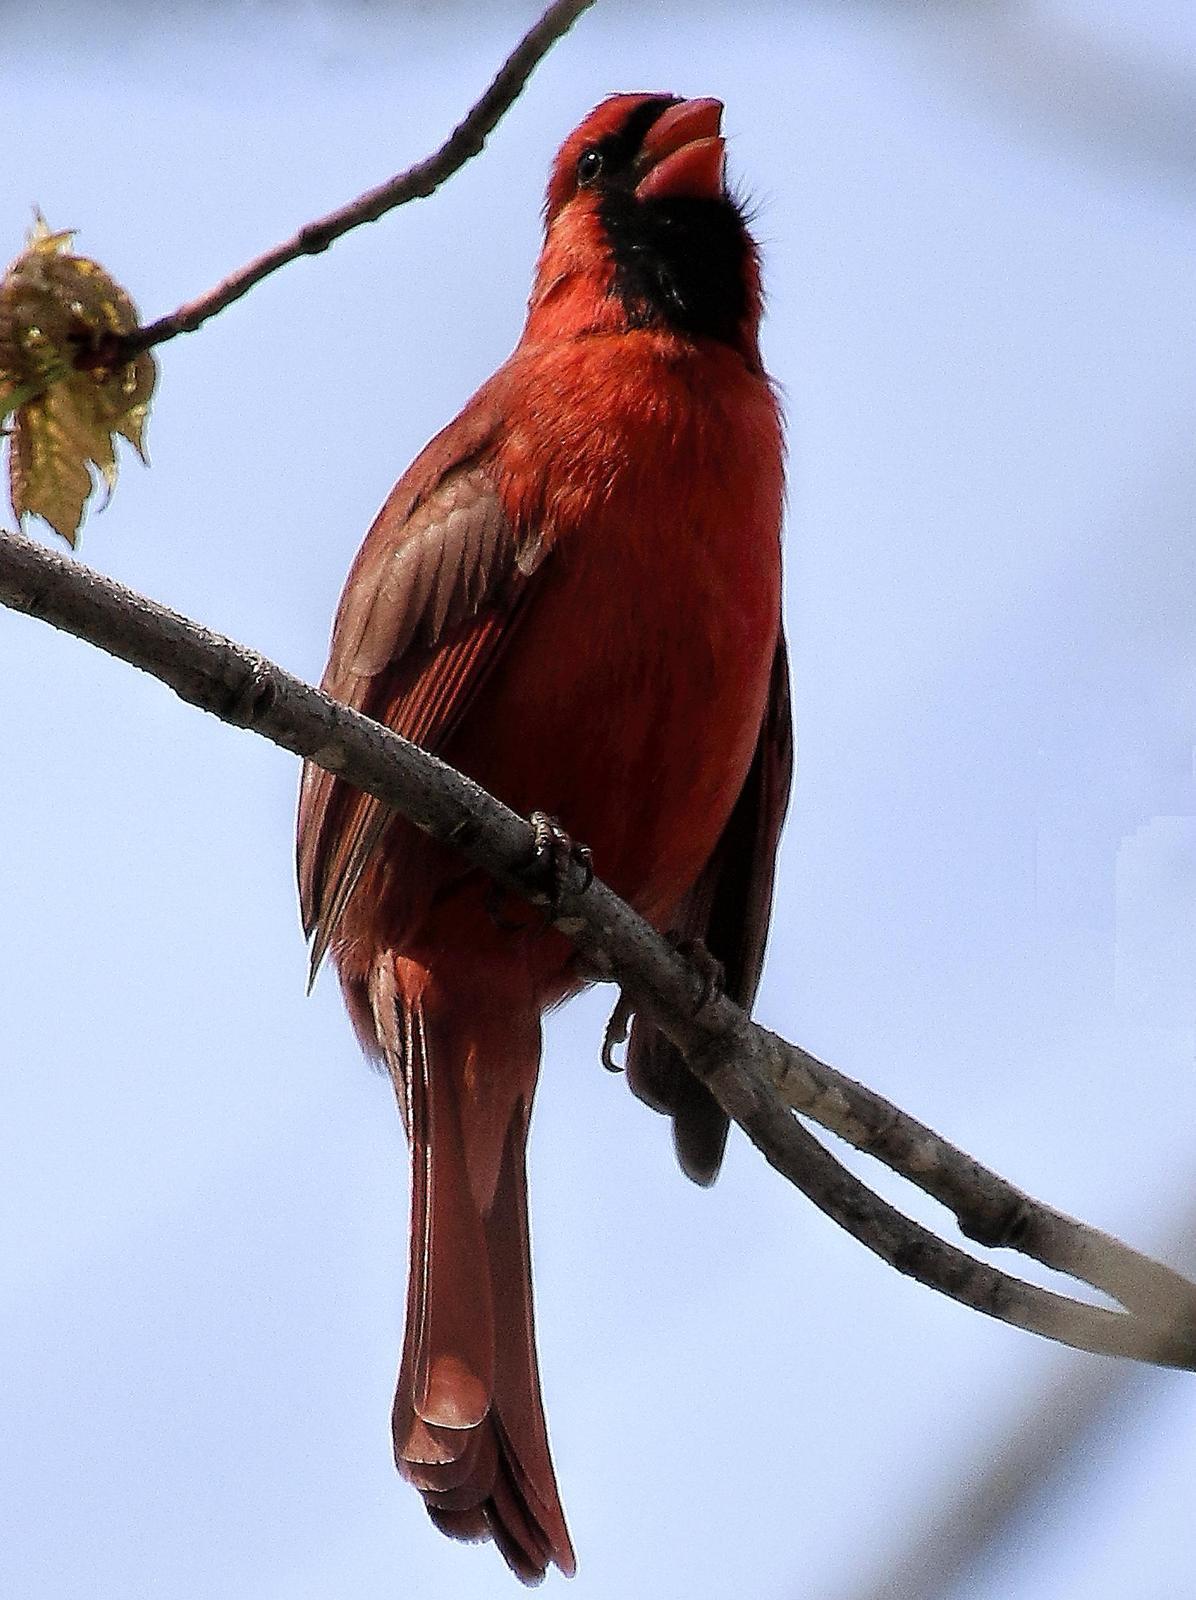 Northern Cardinal (Common) Photo by Dan Tallman